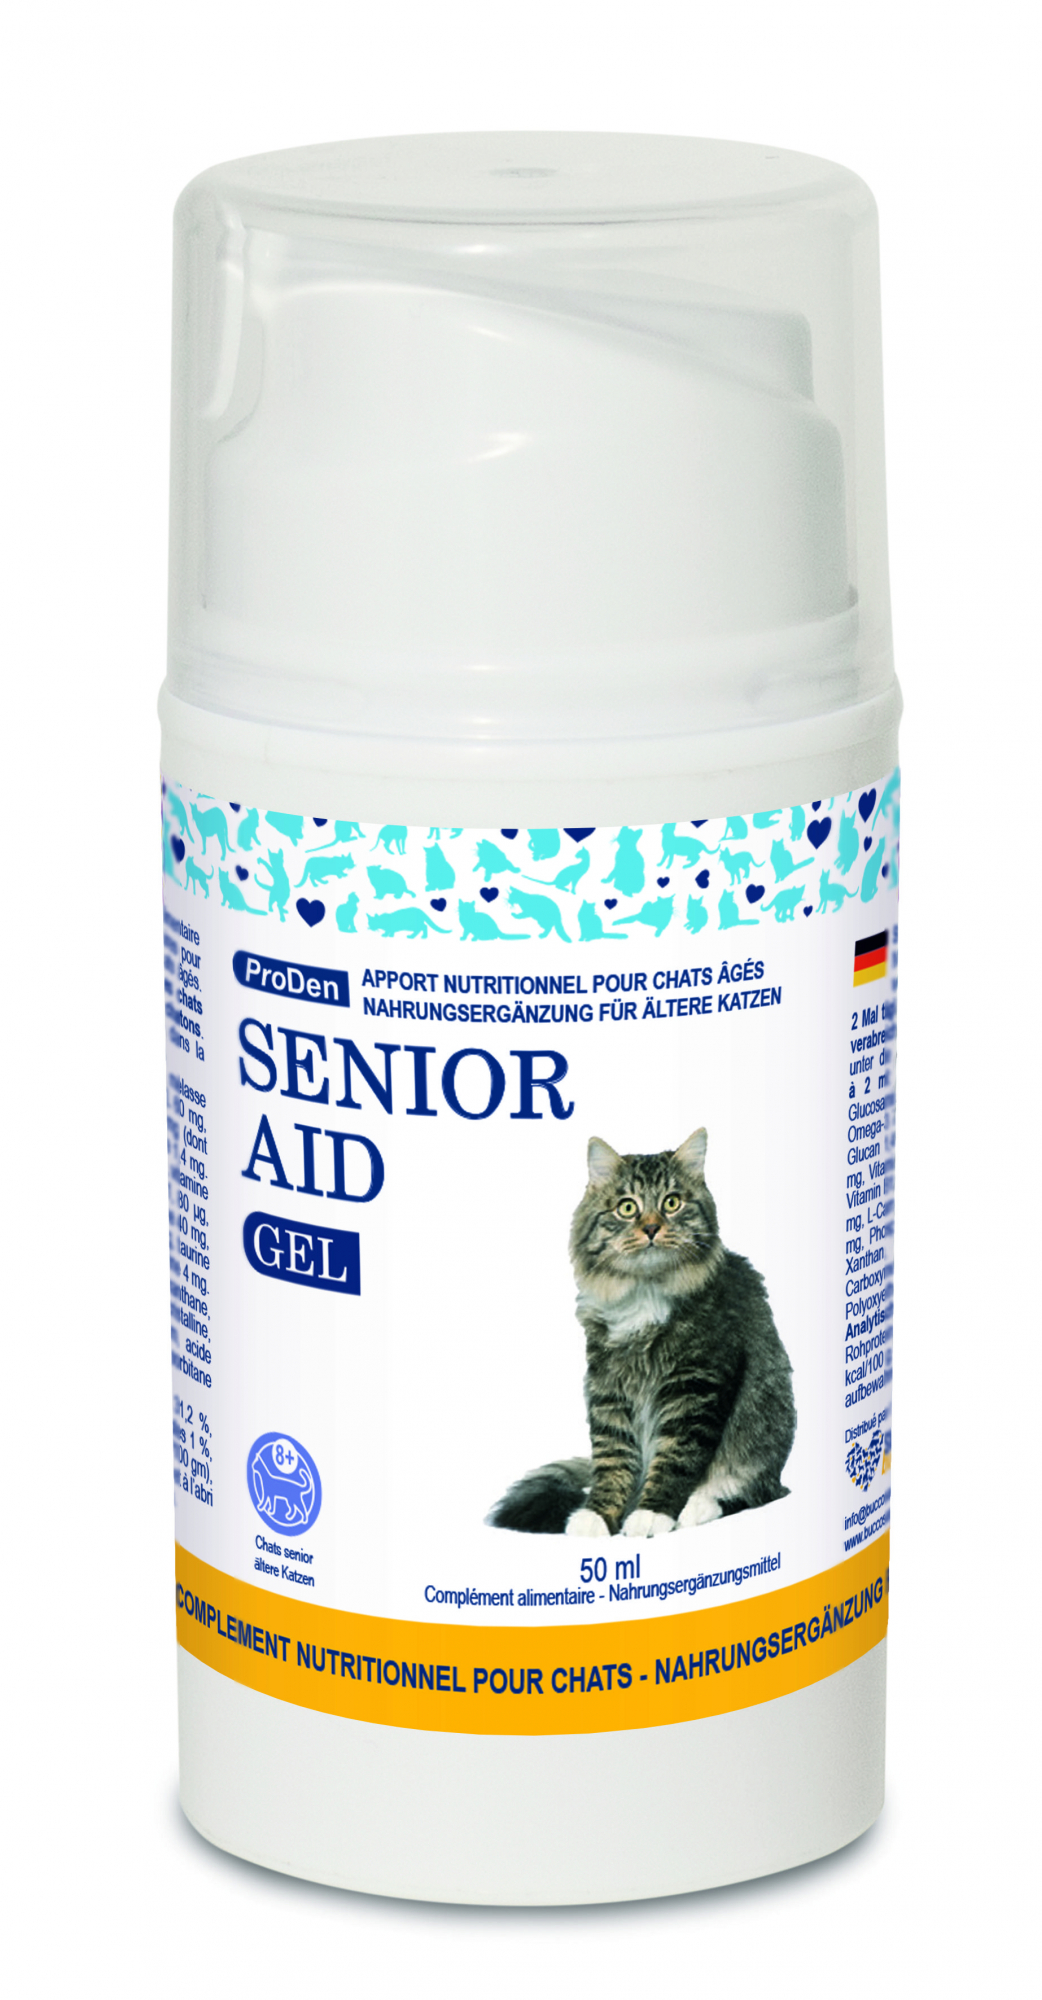 PRODEN NUTRISCIENCE SeniorAid Gel suplemento para gatos mayores